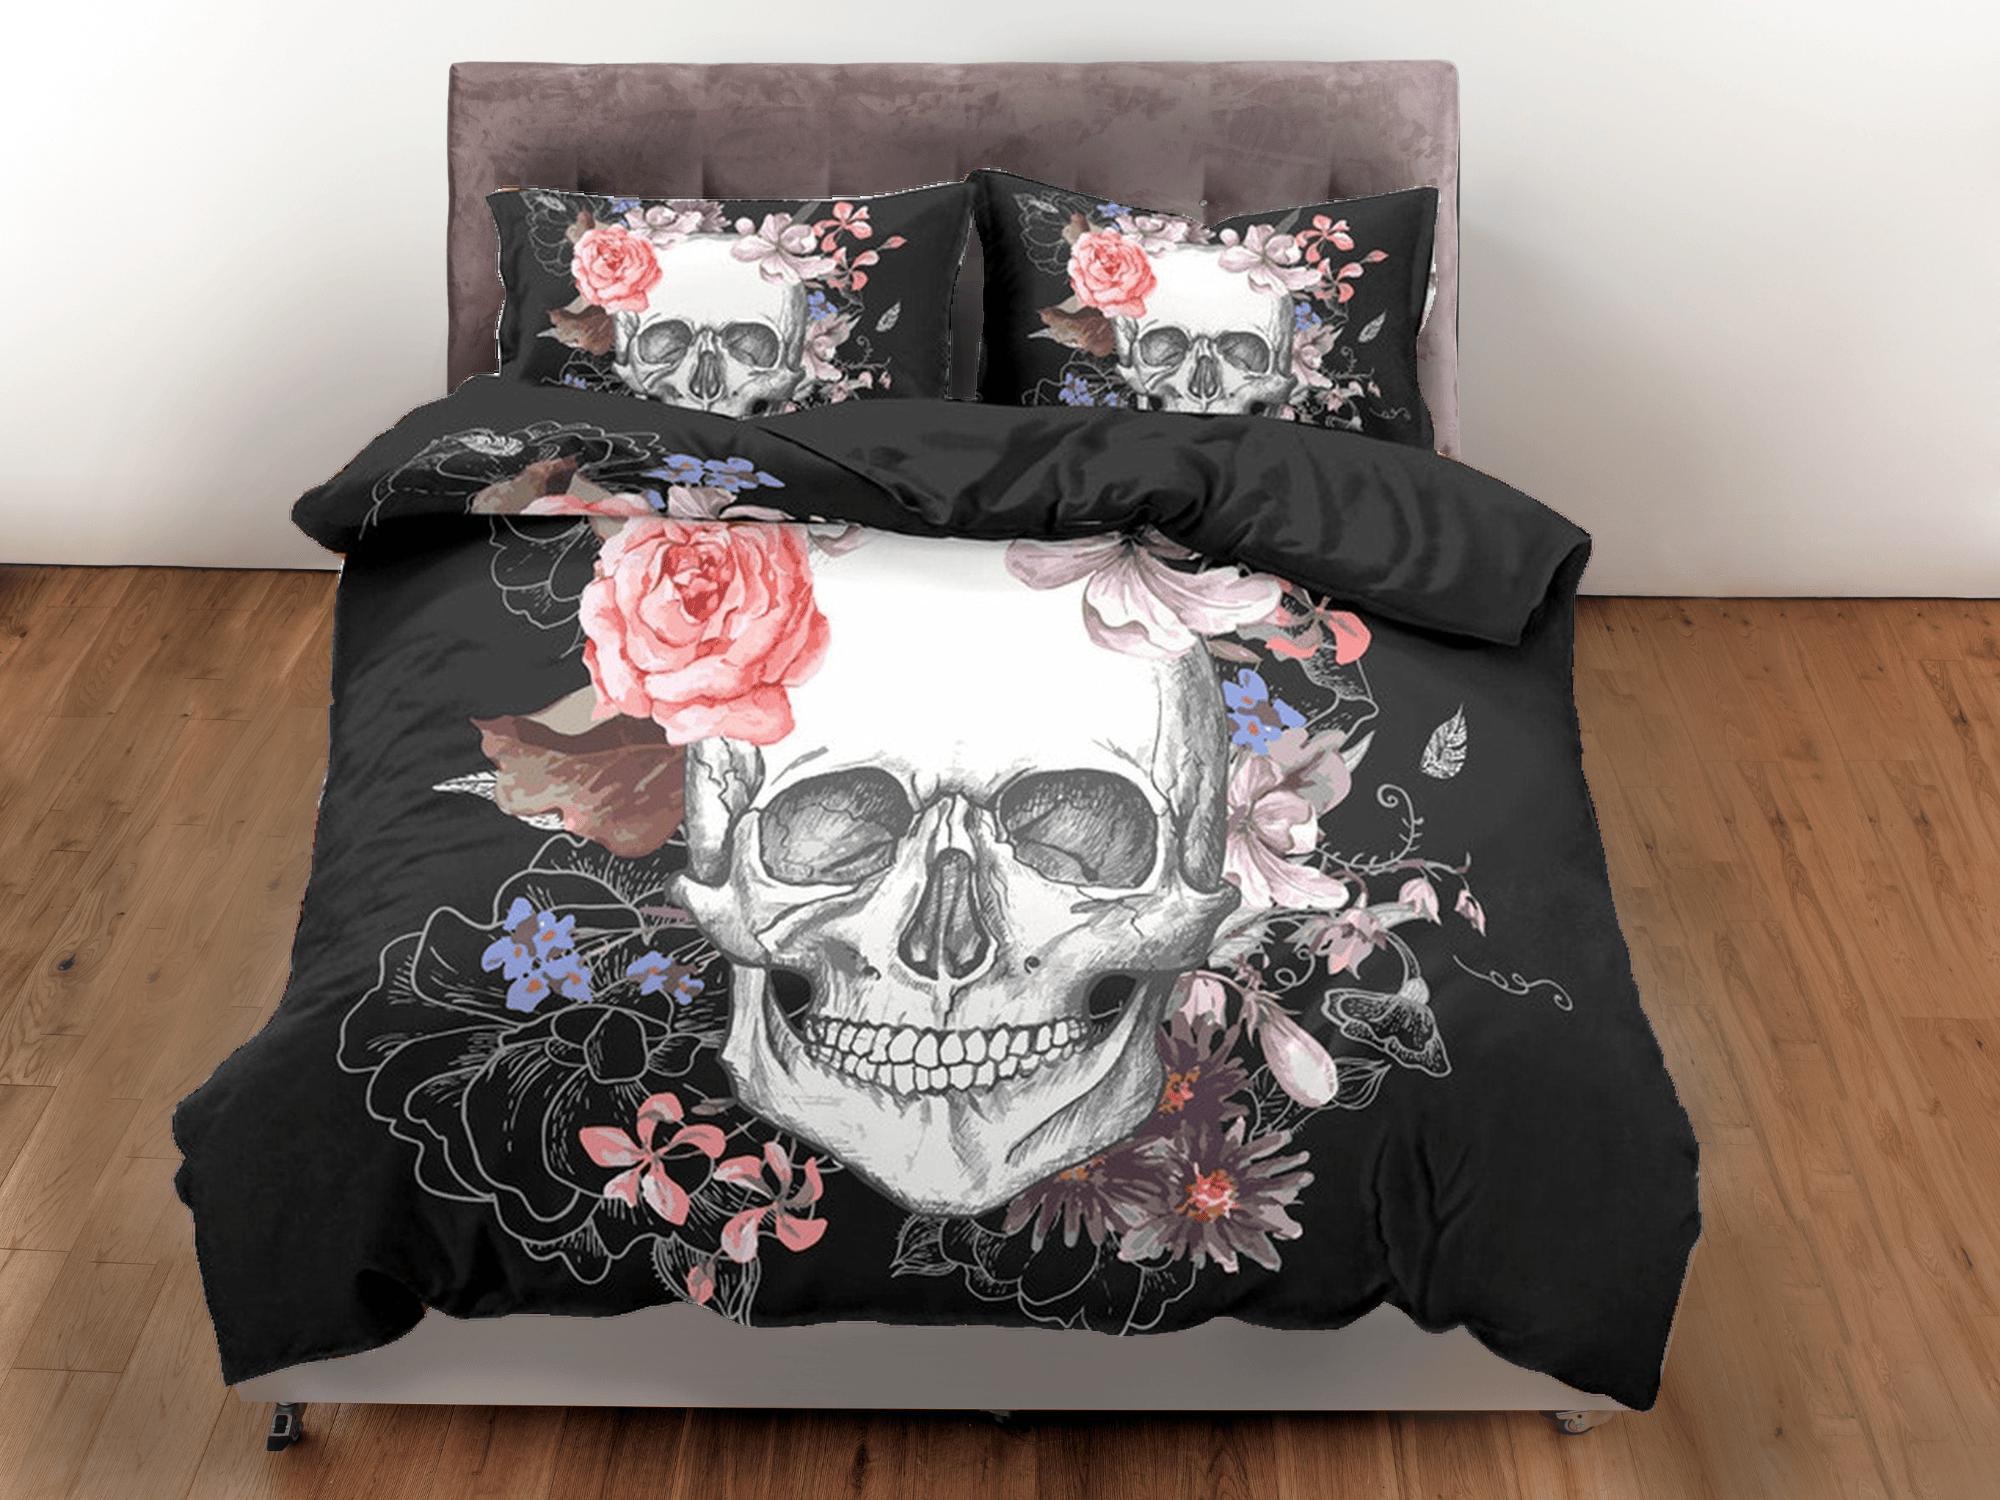 daintyduvet Skull and Roses Black Duvet Cover Set Floral Gothic Bedspread Dorm Bedding Pillowcase Comforter Cover